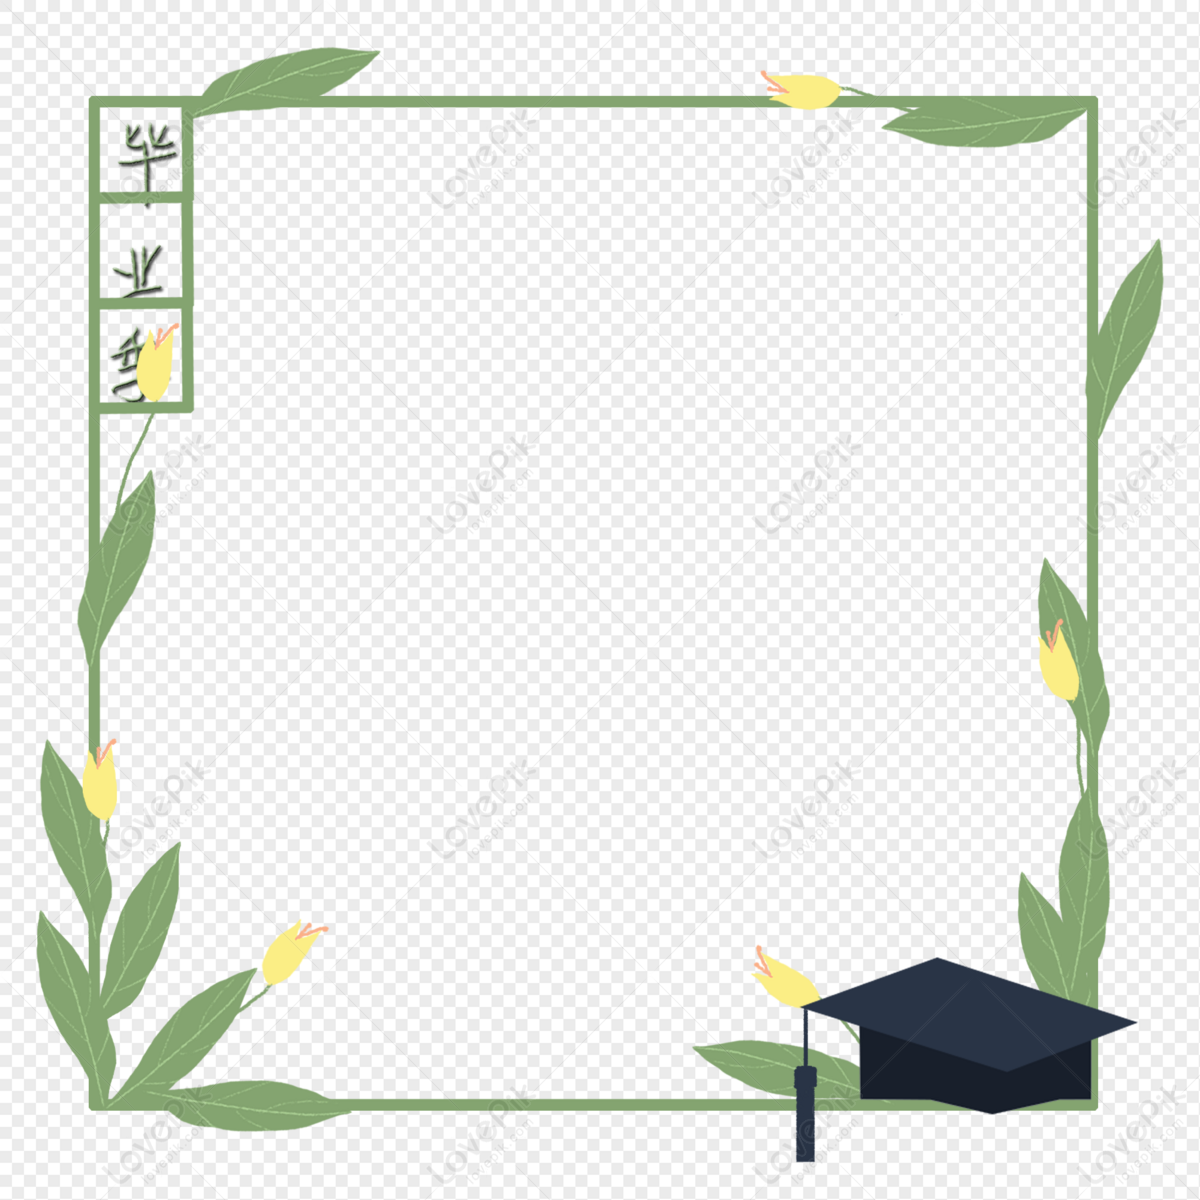 green graduation border